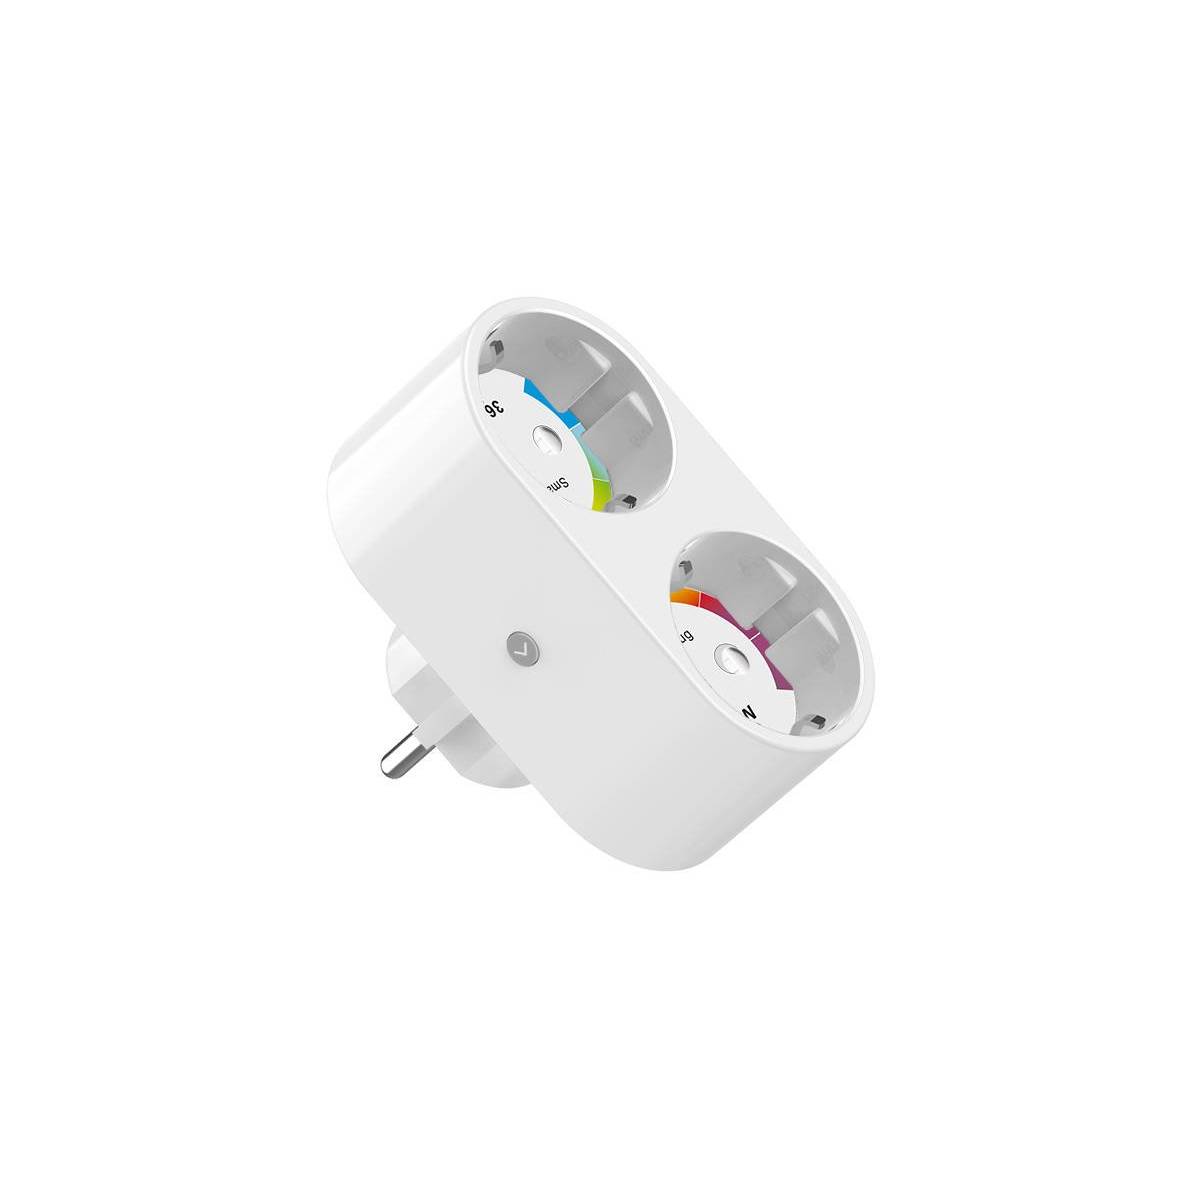 Gosund smart double power plug with Wi-Fi - Alexa, Google Home -  Mackabler.dk